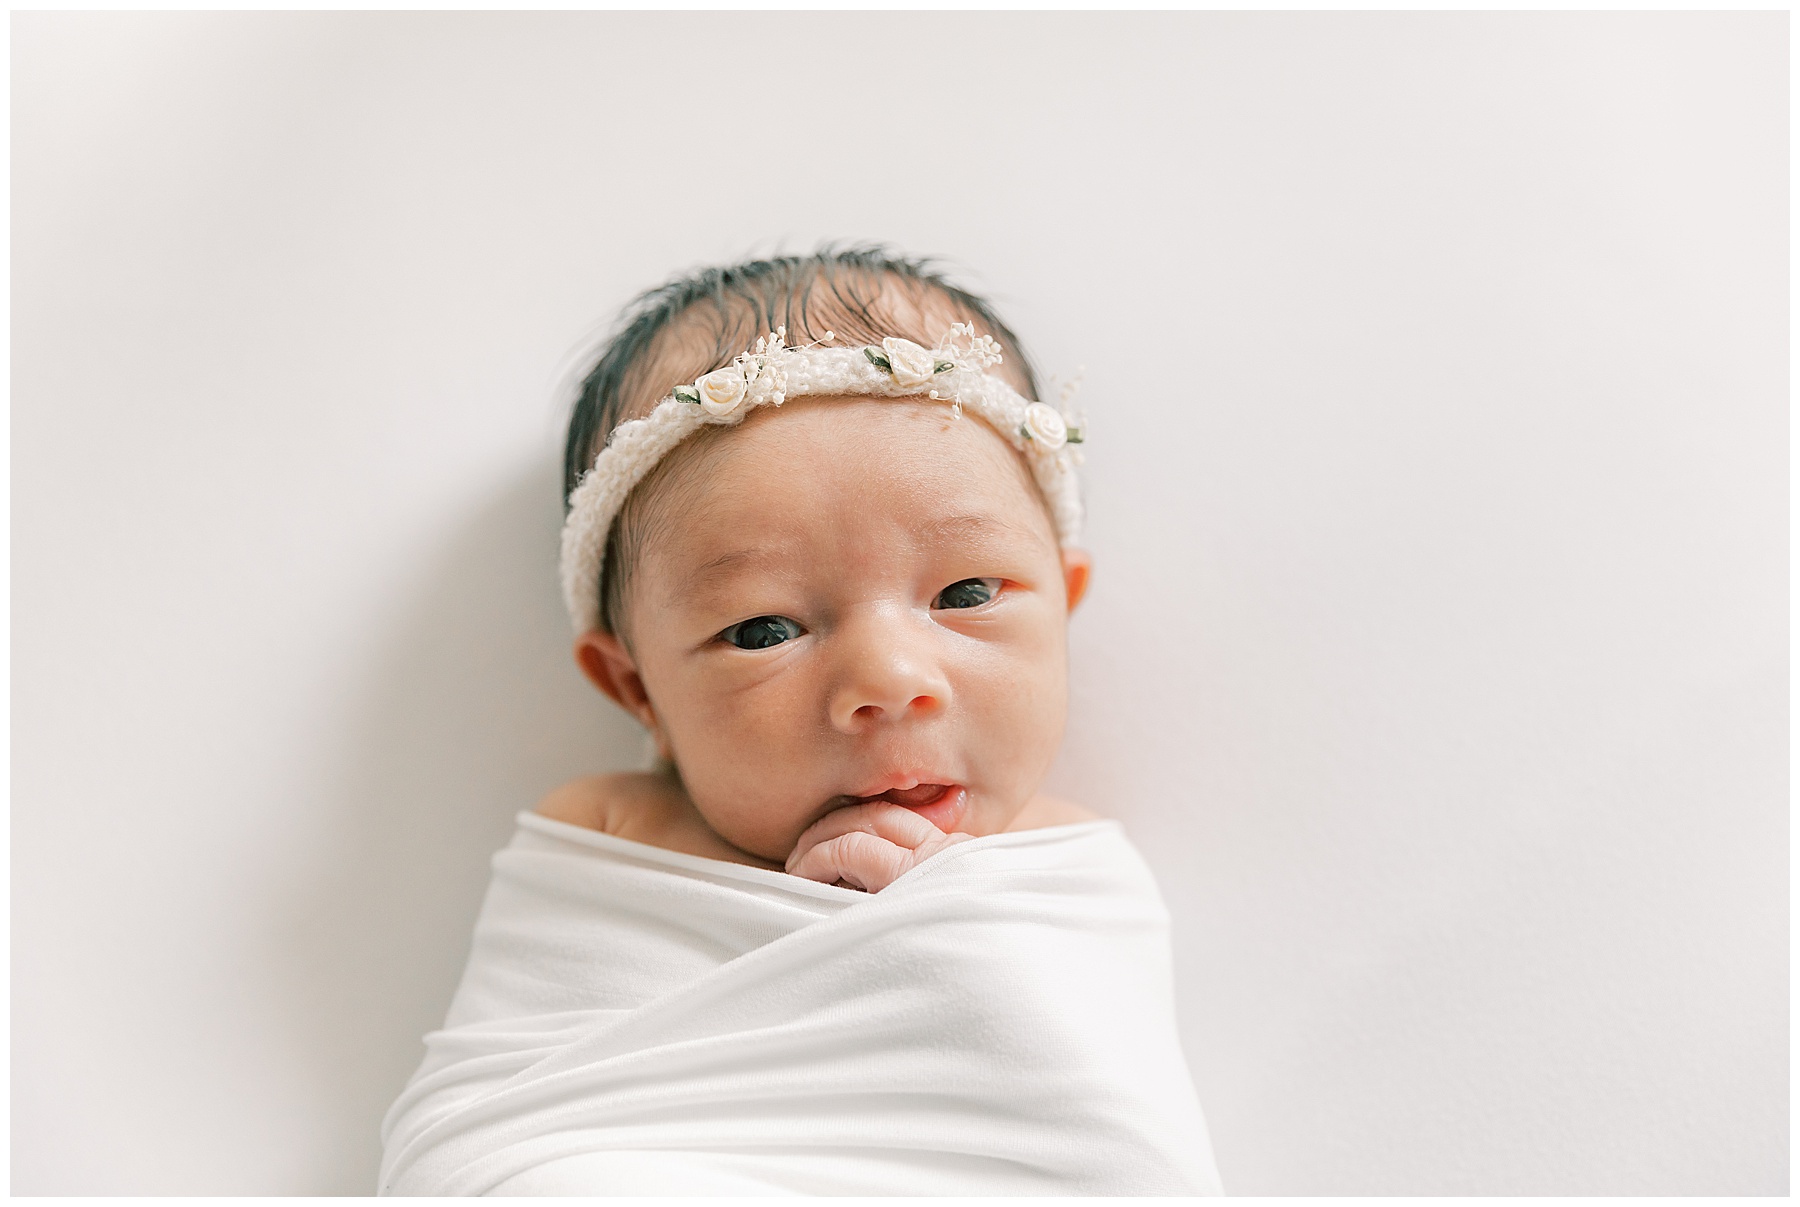 Newborn and baby photographer - Katie Petrick Photography